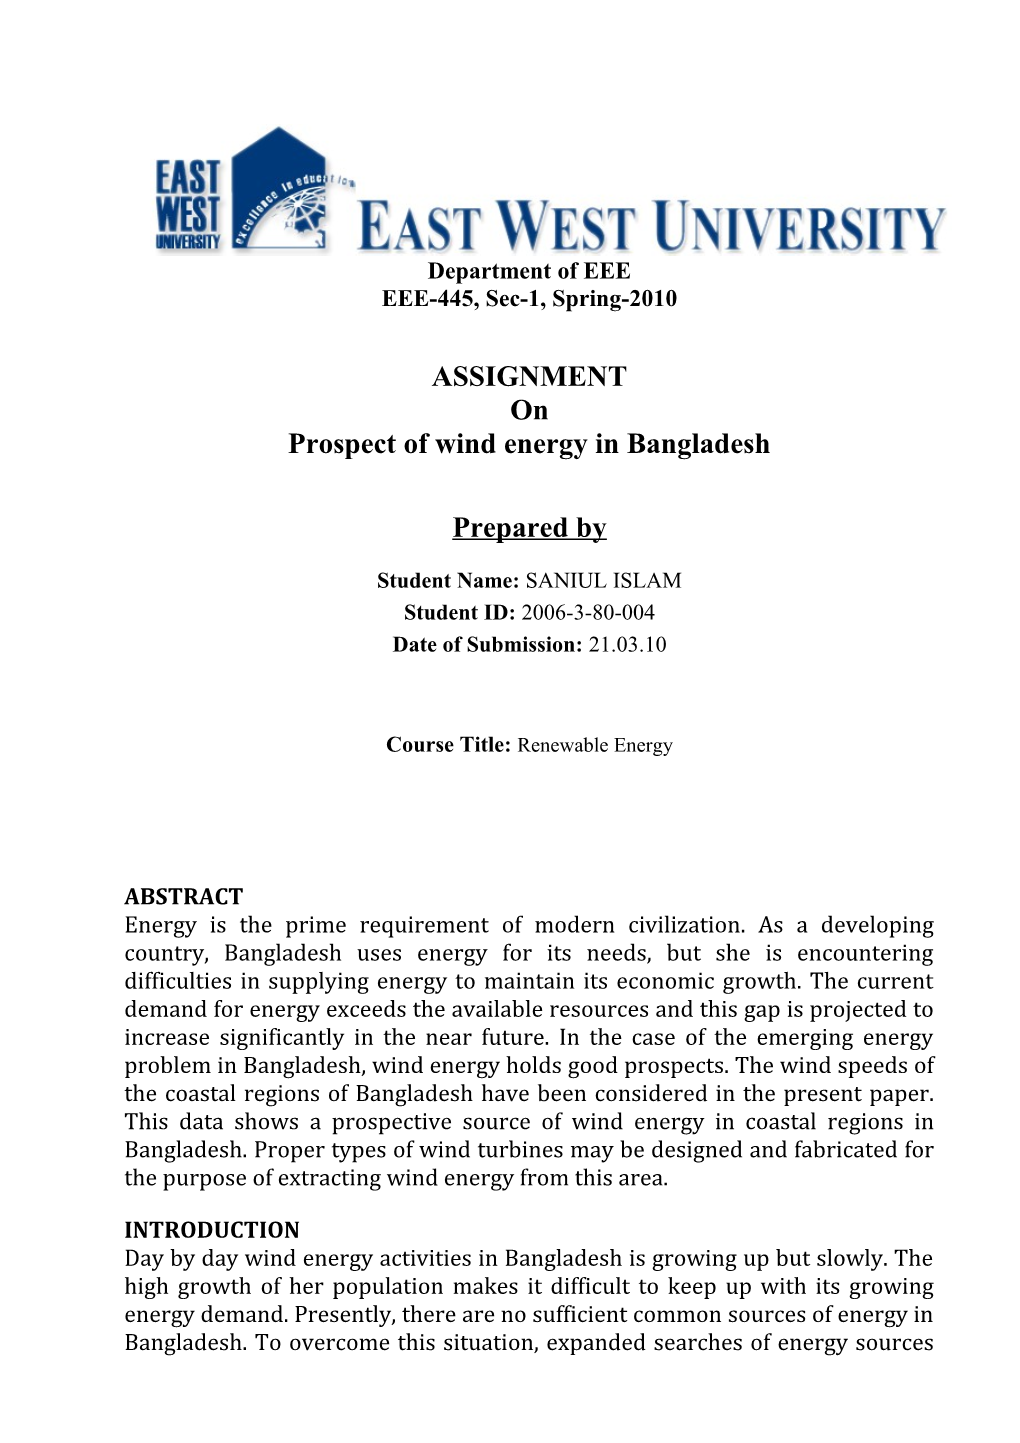 Prospect of Wind Energy in Bangladesh